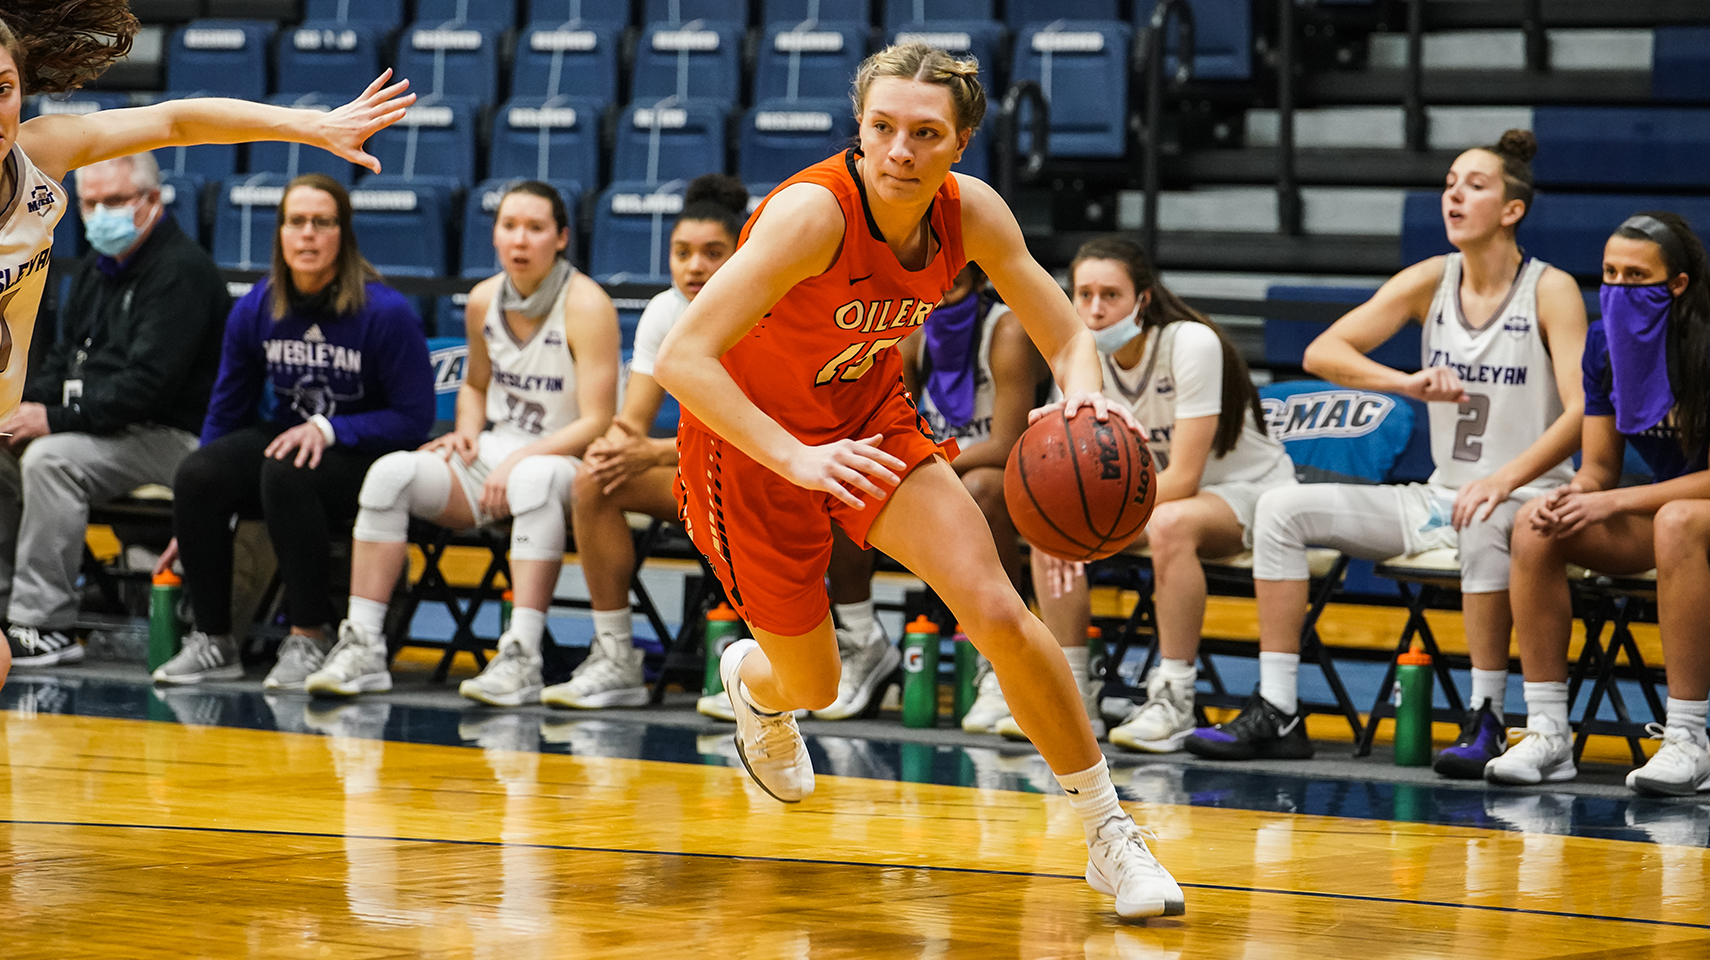 Women's basketball player in orange uniform driving baseline